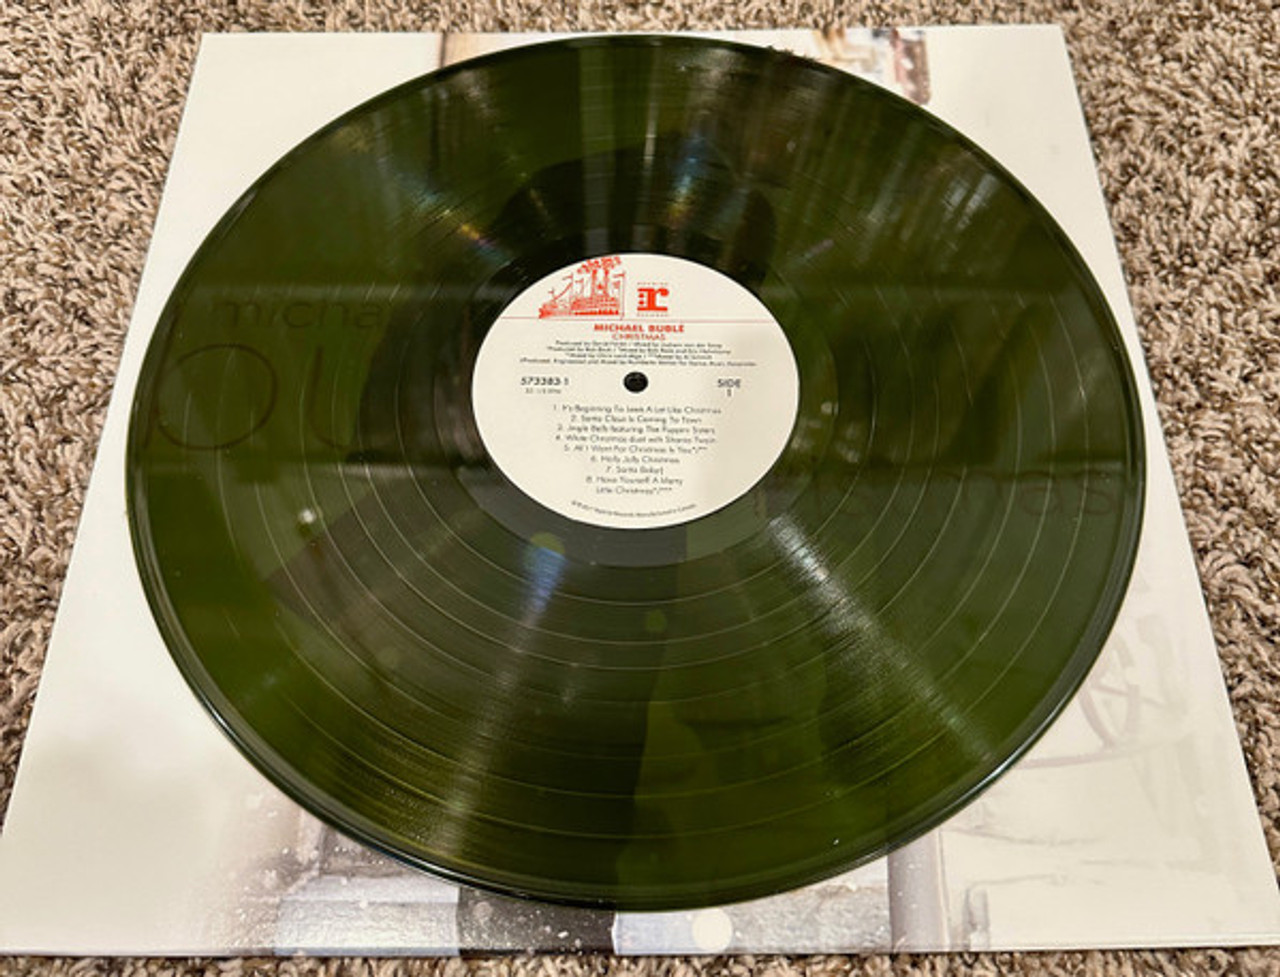 Michael Bublé - Christmas (vinyl) (red) : Target